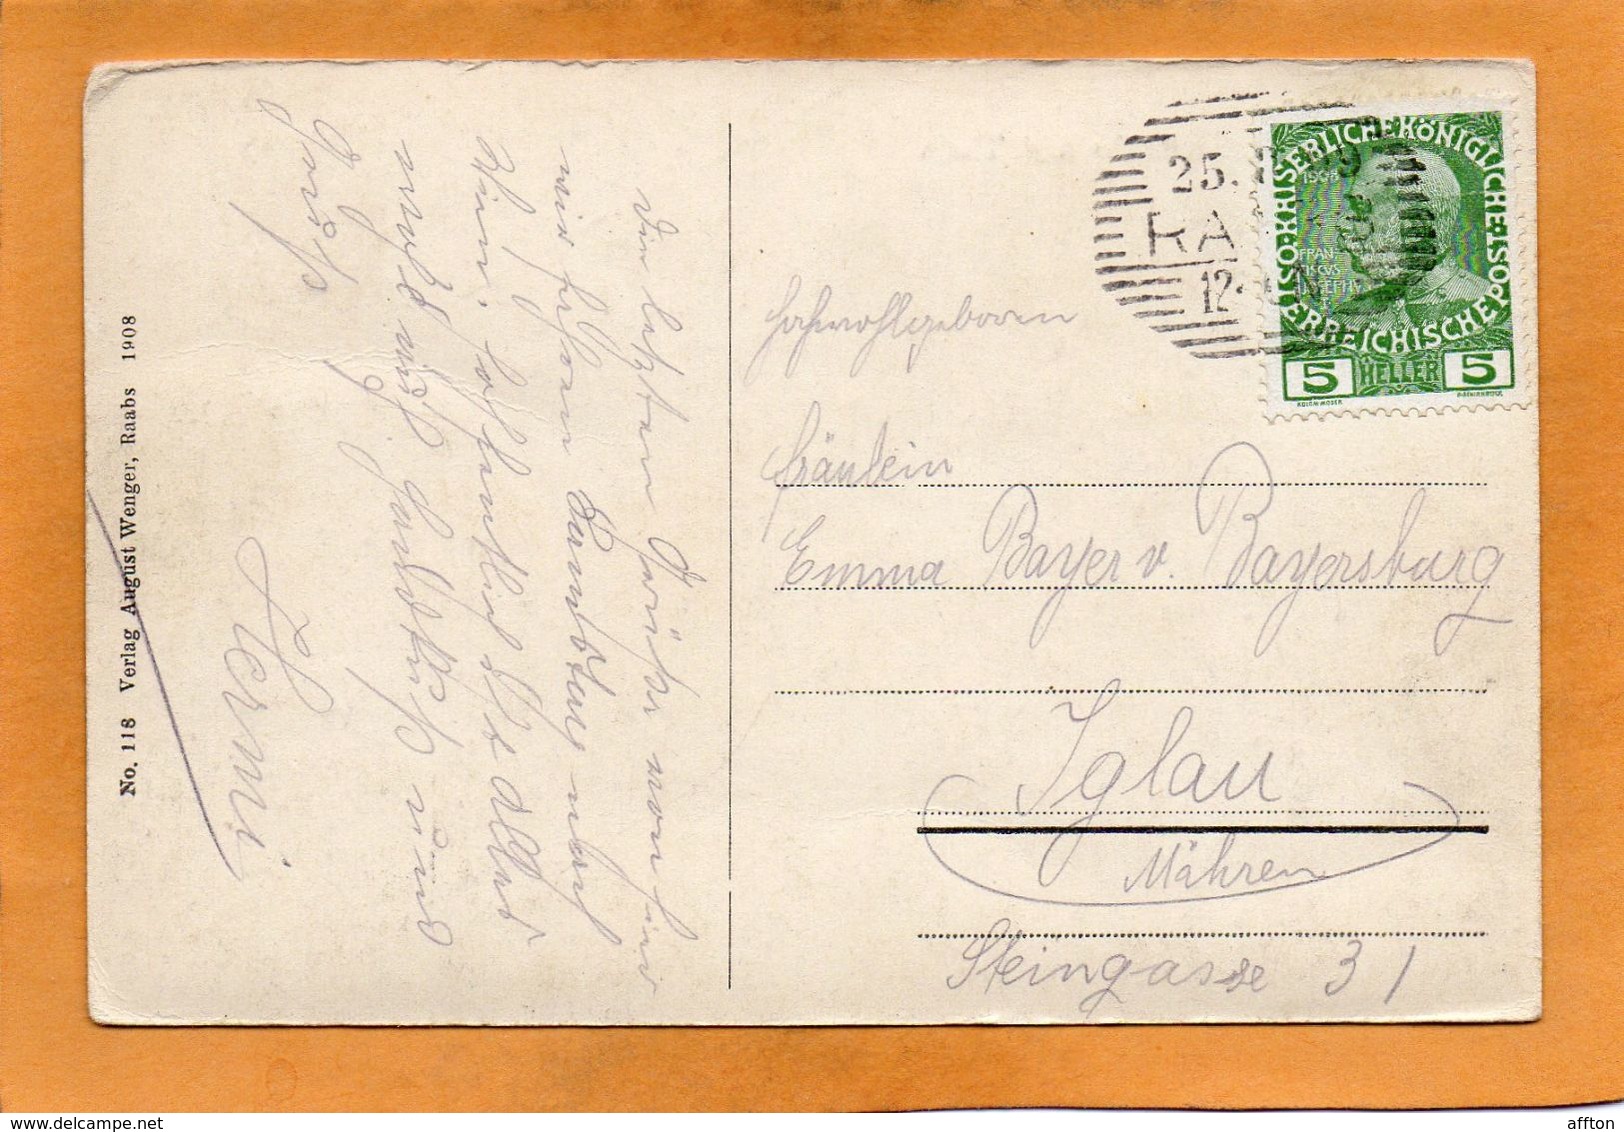 Raabs An Der Thaya 1909 Postcard - Raabs An Der Thaya